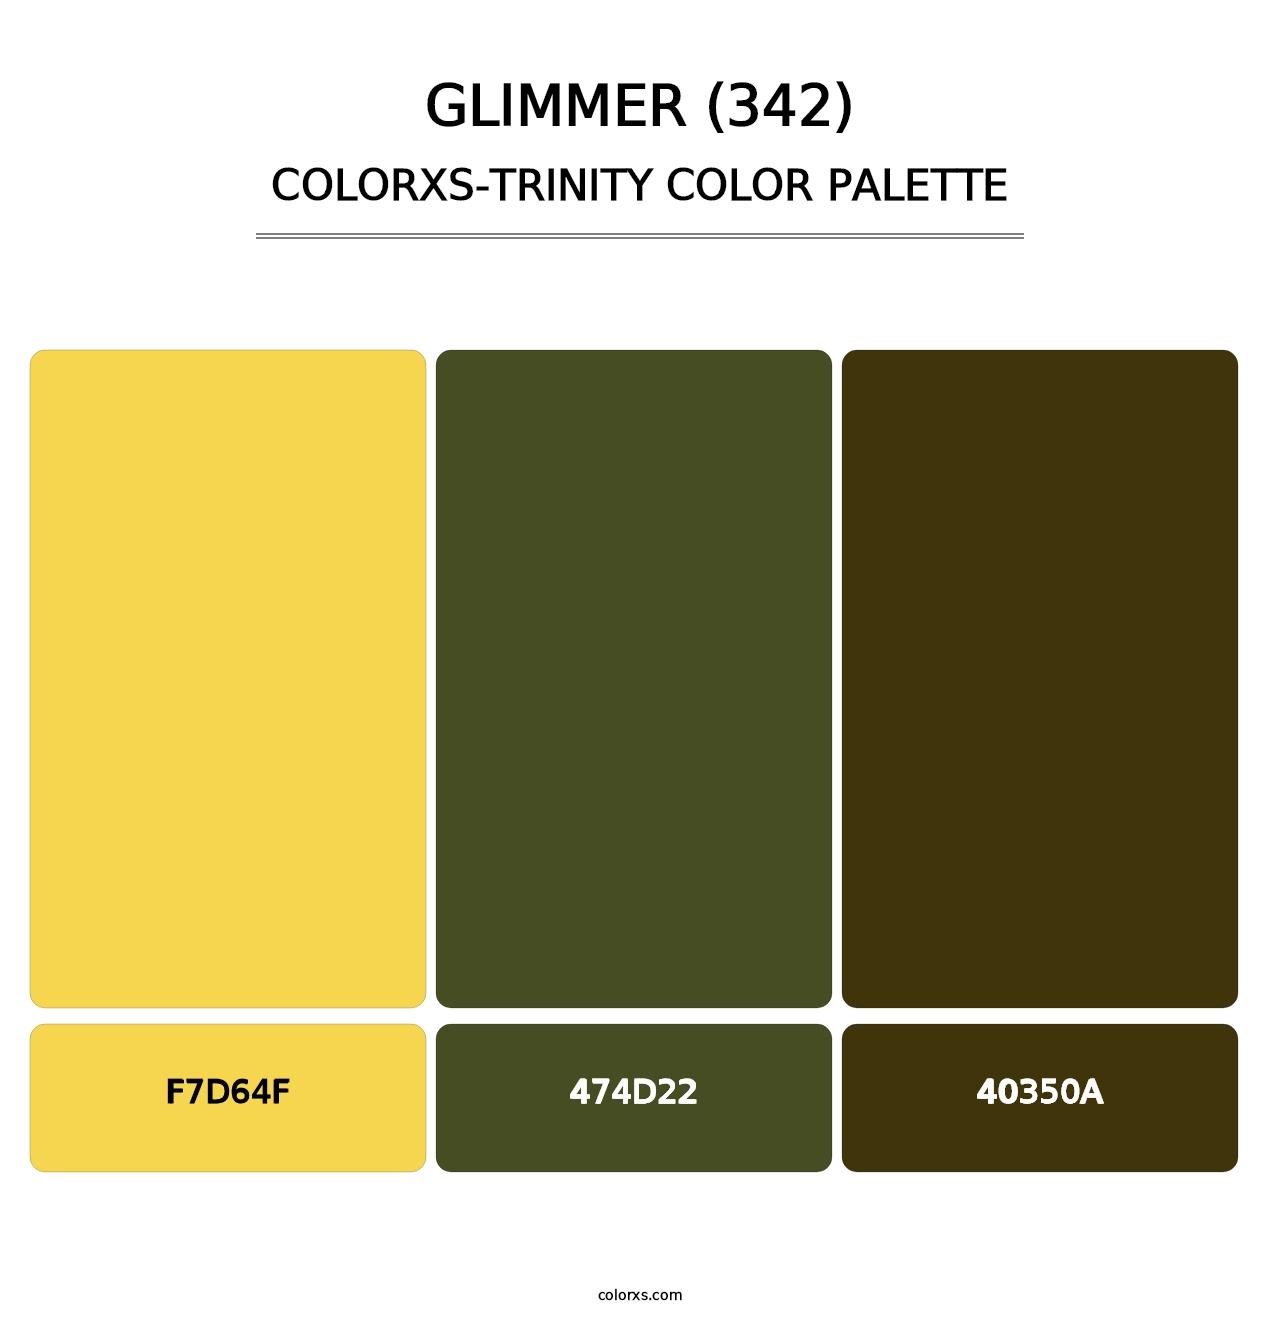 Glimmer (342) - Colorxs Trinity Palette